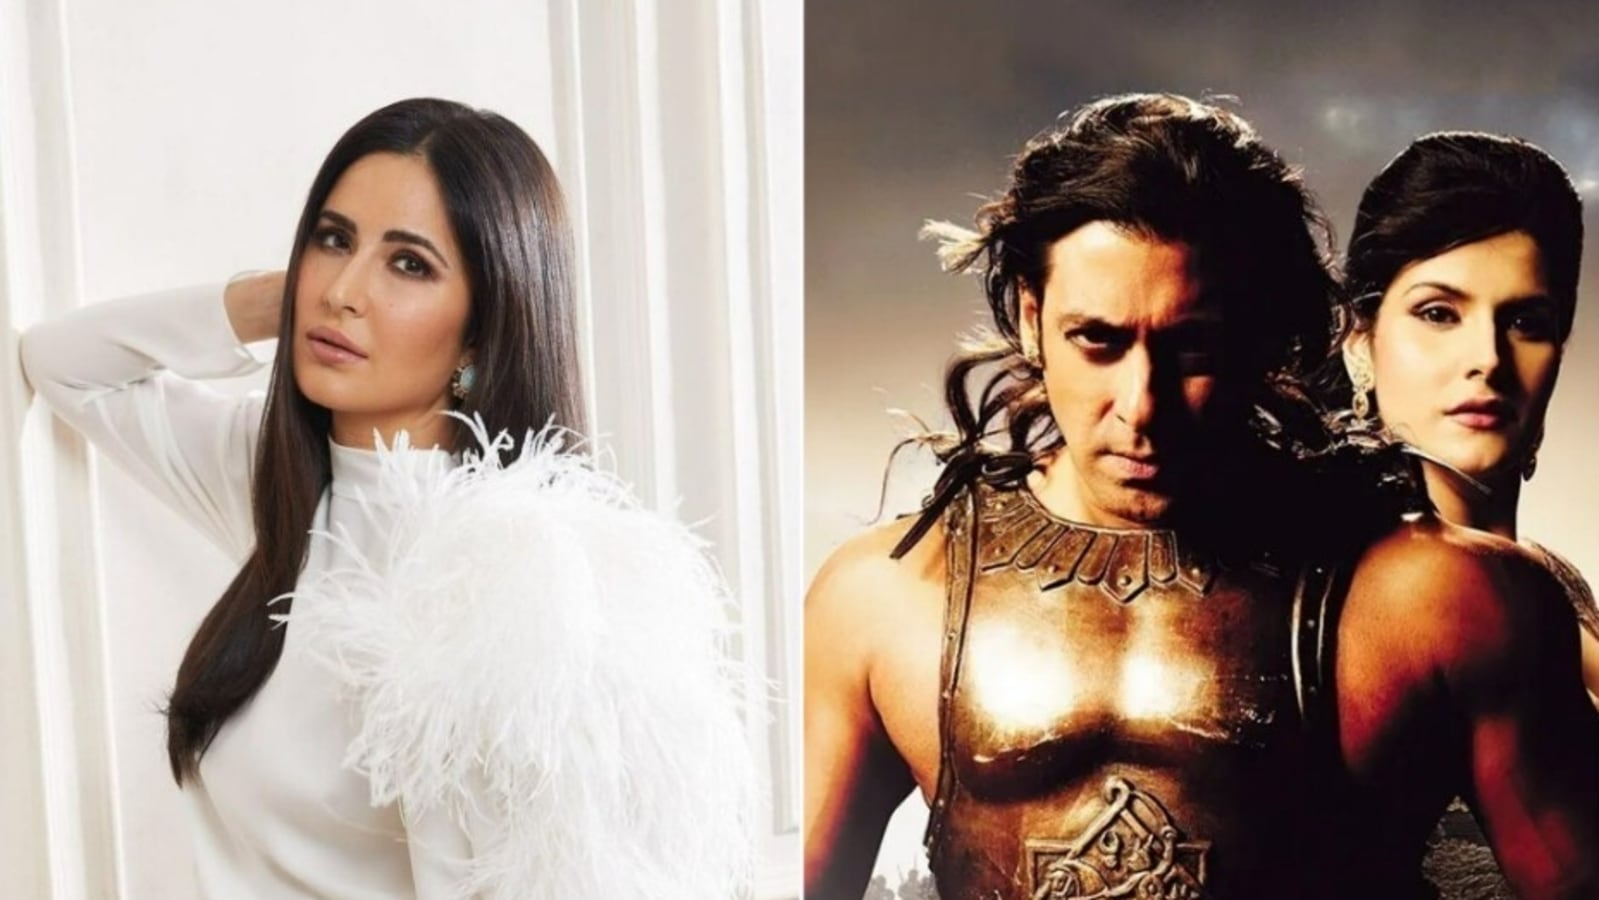 Salman Katrina Xxx Video - When Katrina Kaif spoke about Salman working with 'girls who look like her'  | Bollywood - Hindustan Times